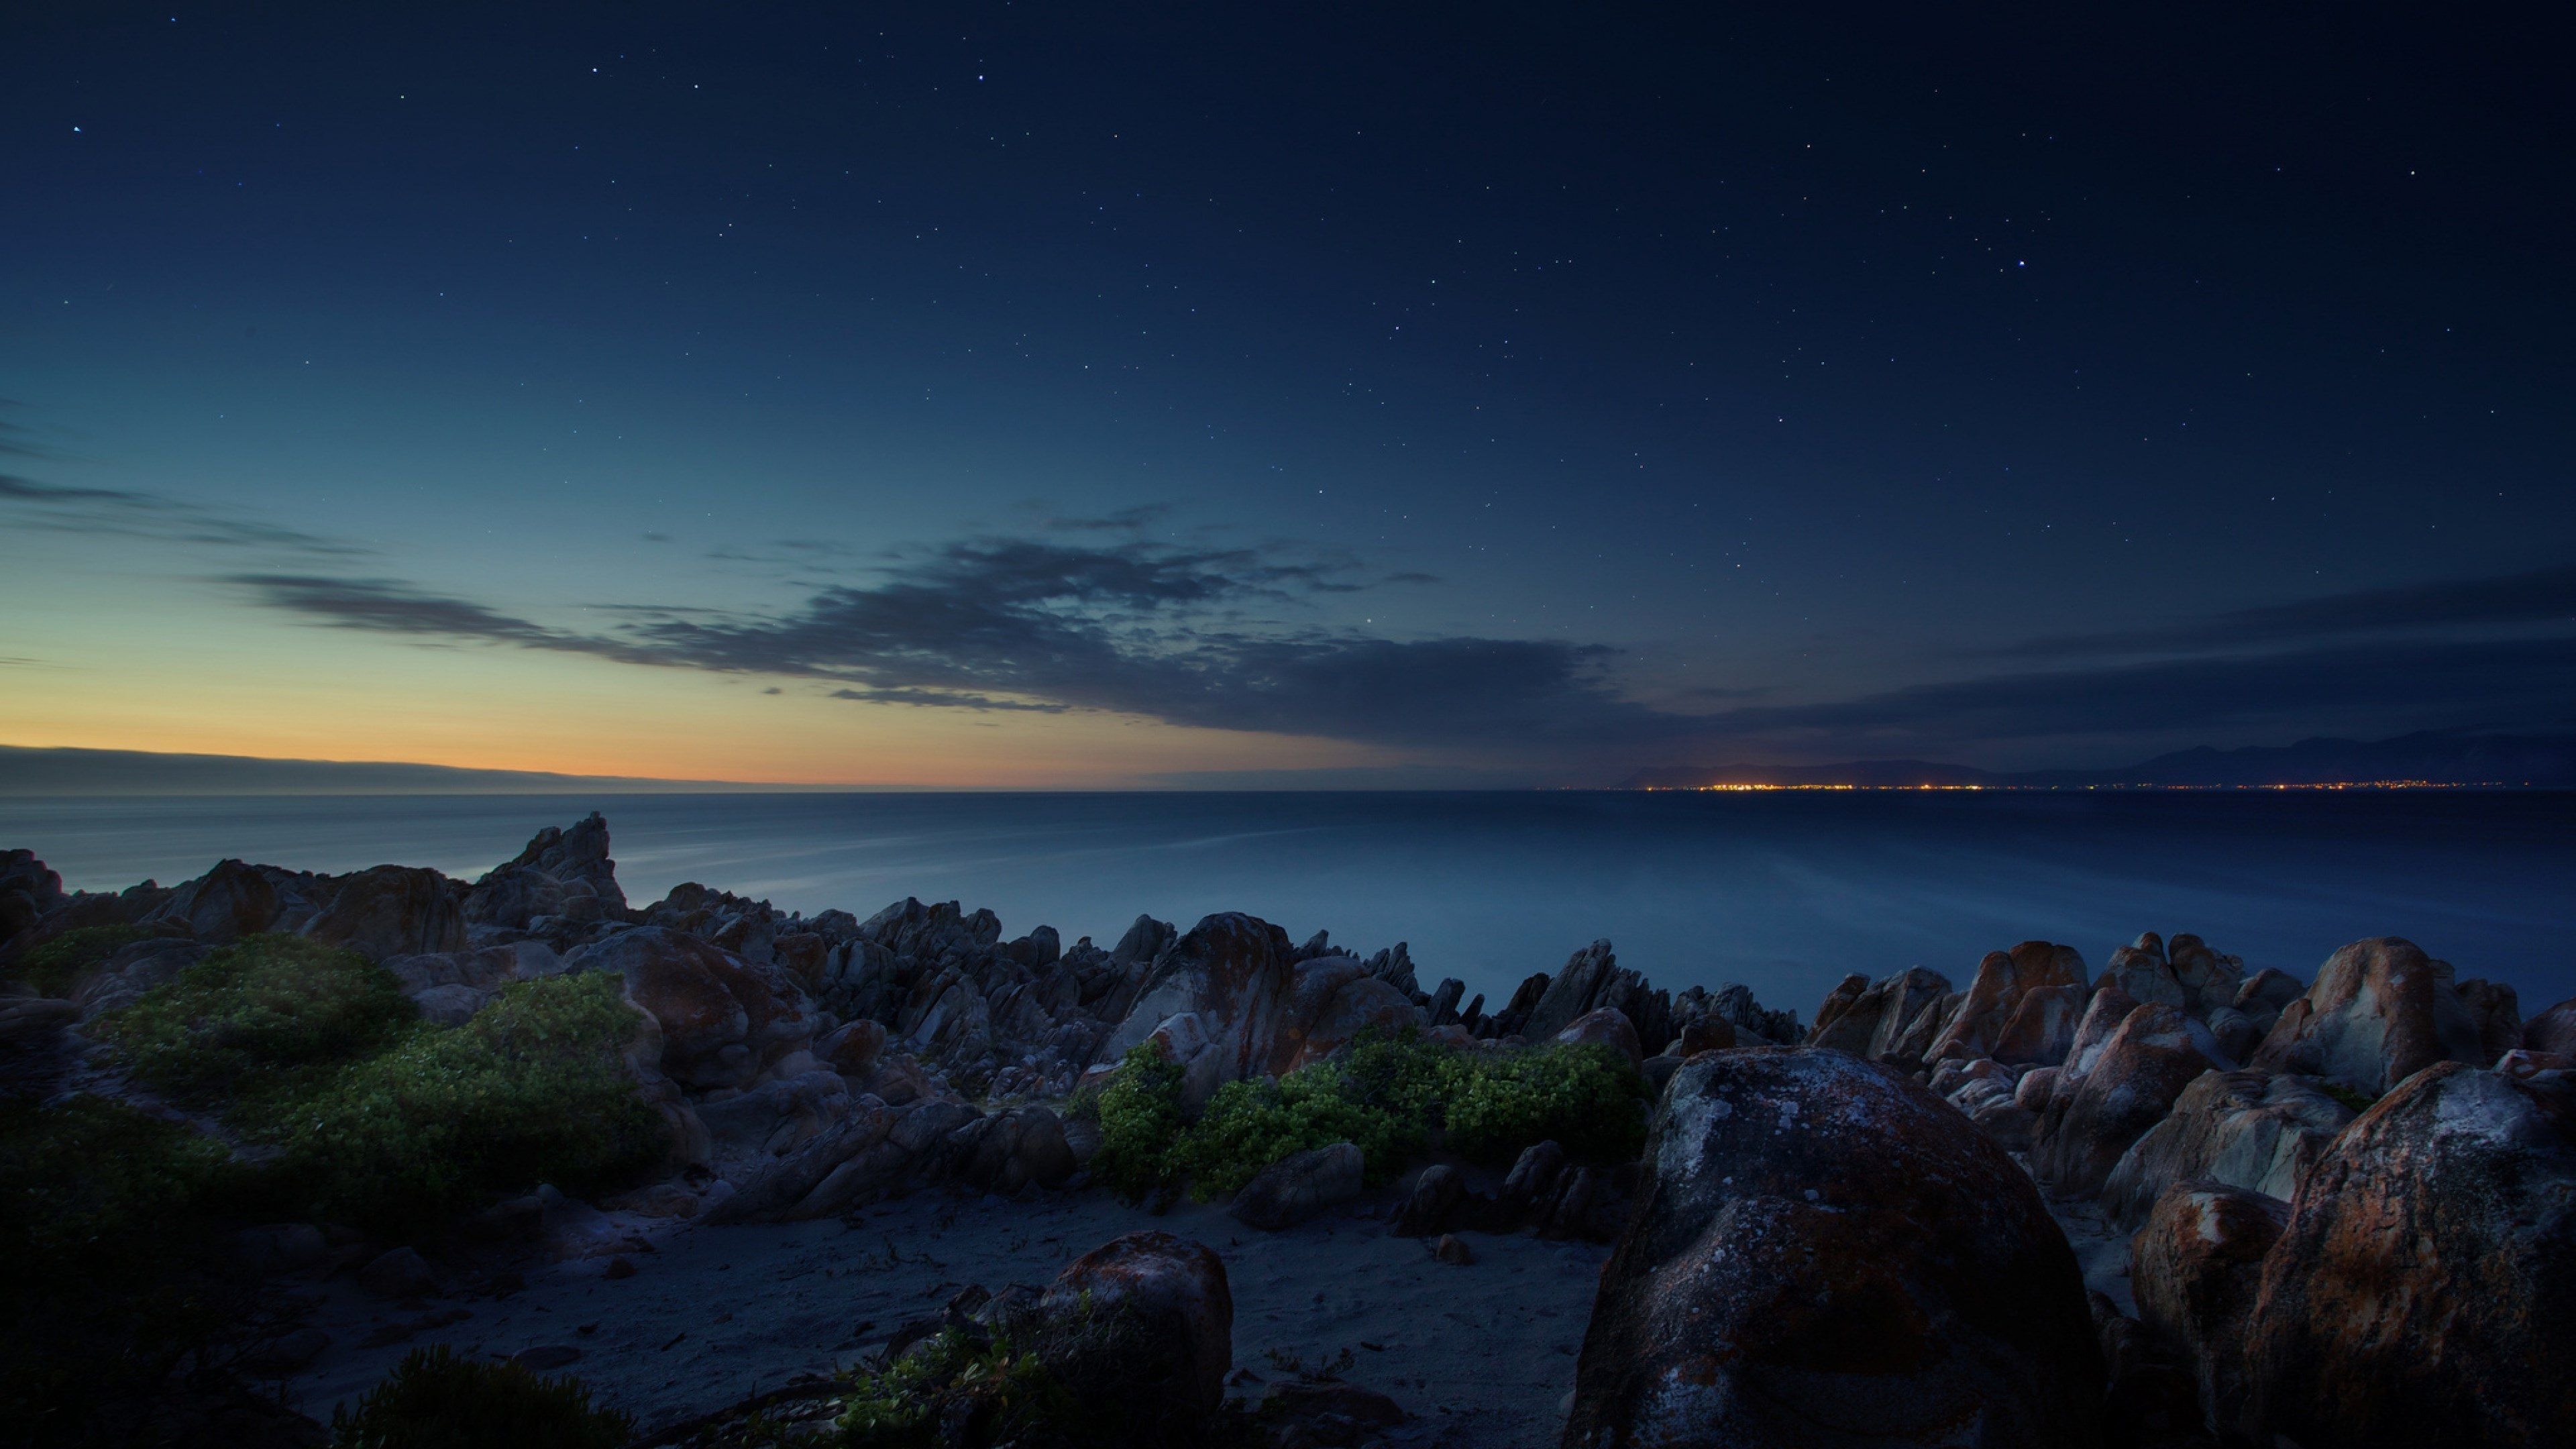 south africa 4k pc desktop wallpaper HD. Ocean at night, Ocean background, Beach scenery